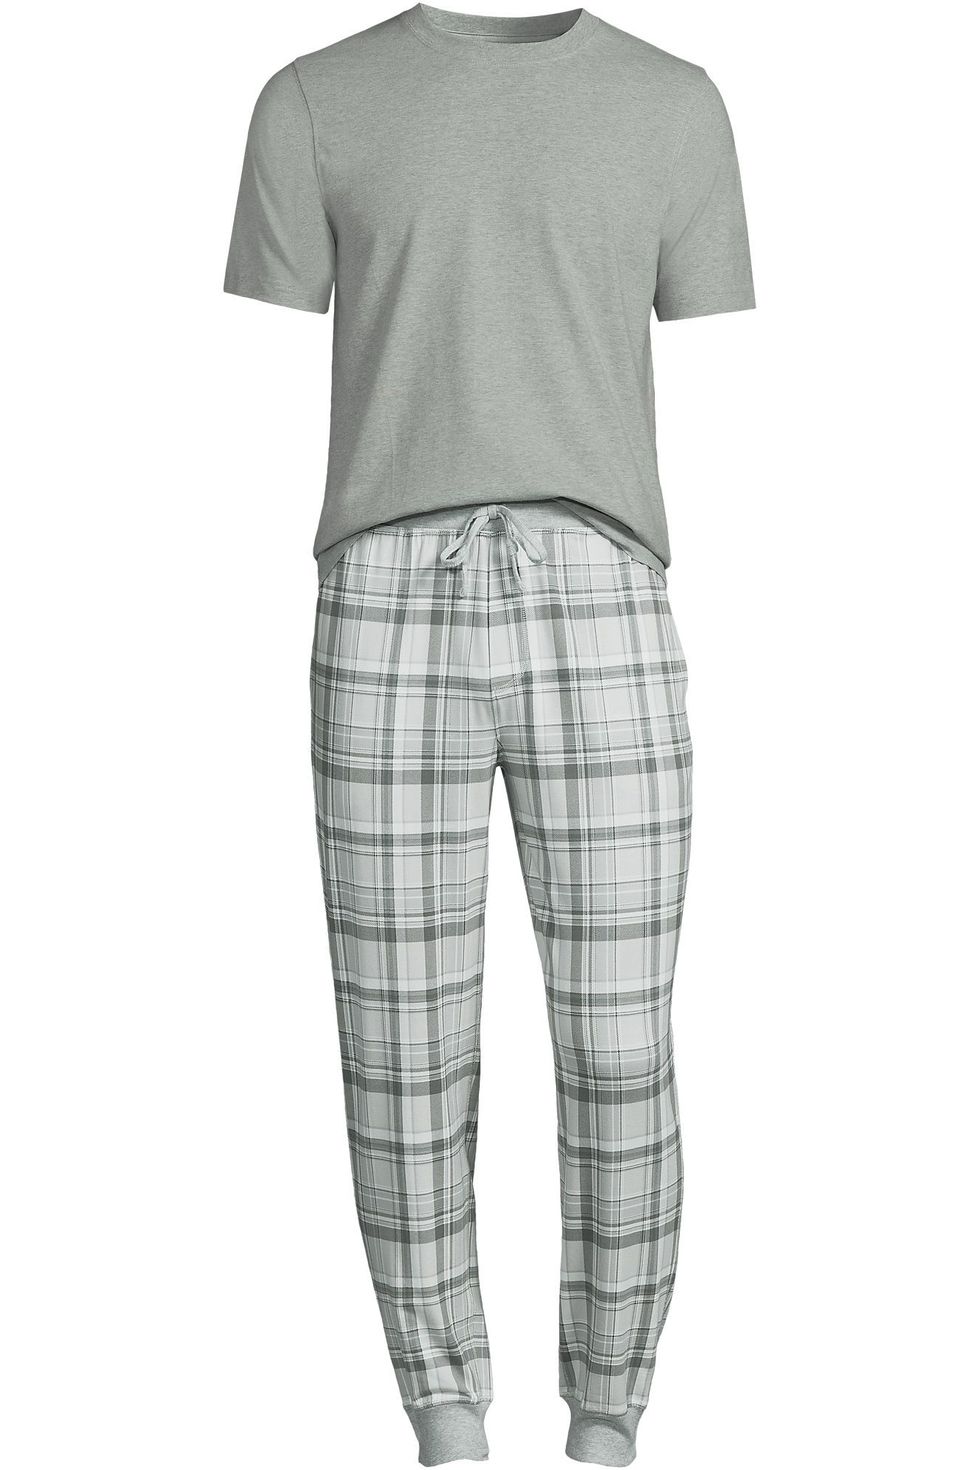 As Is Hanes Comfort Sleep Women's Pajama Set 